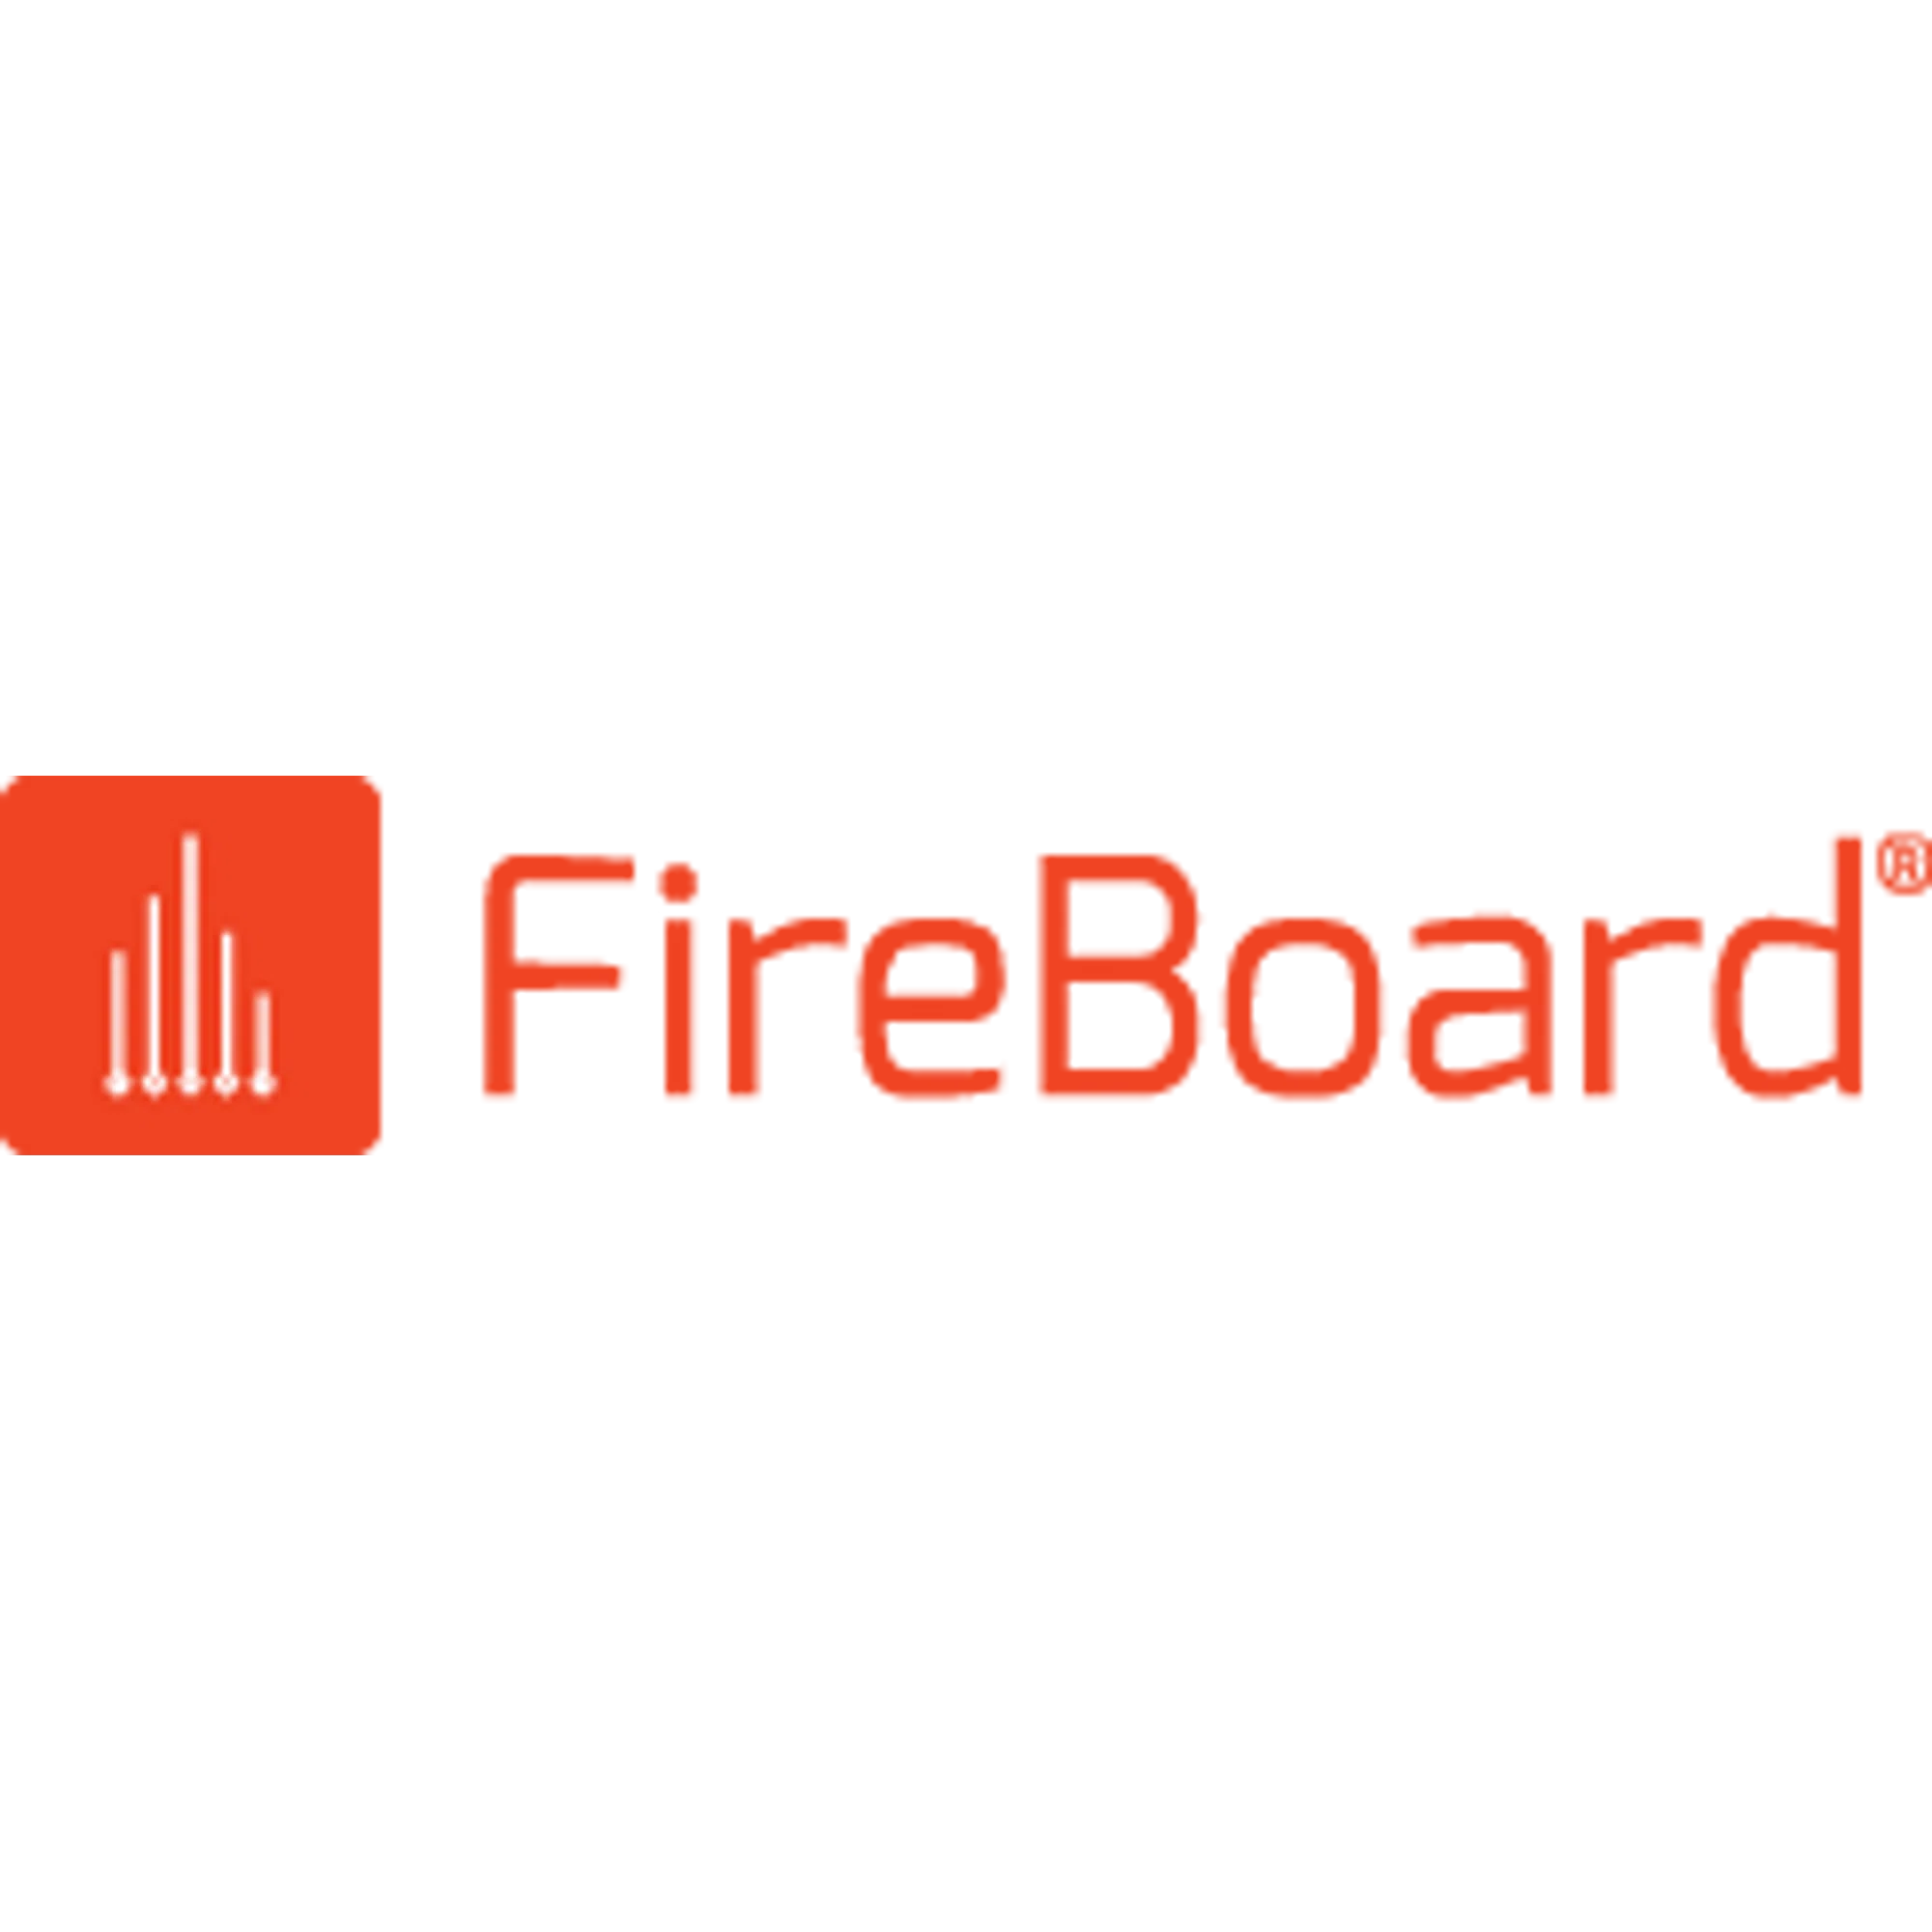 FireBoard Labs